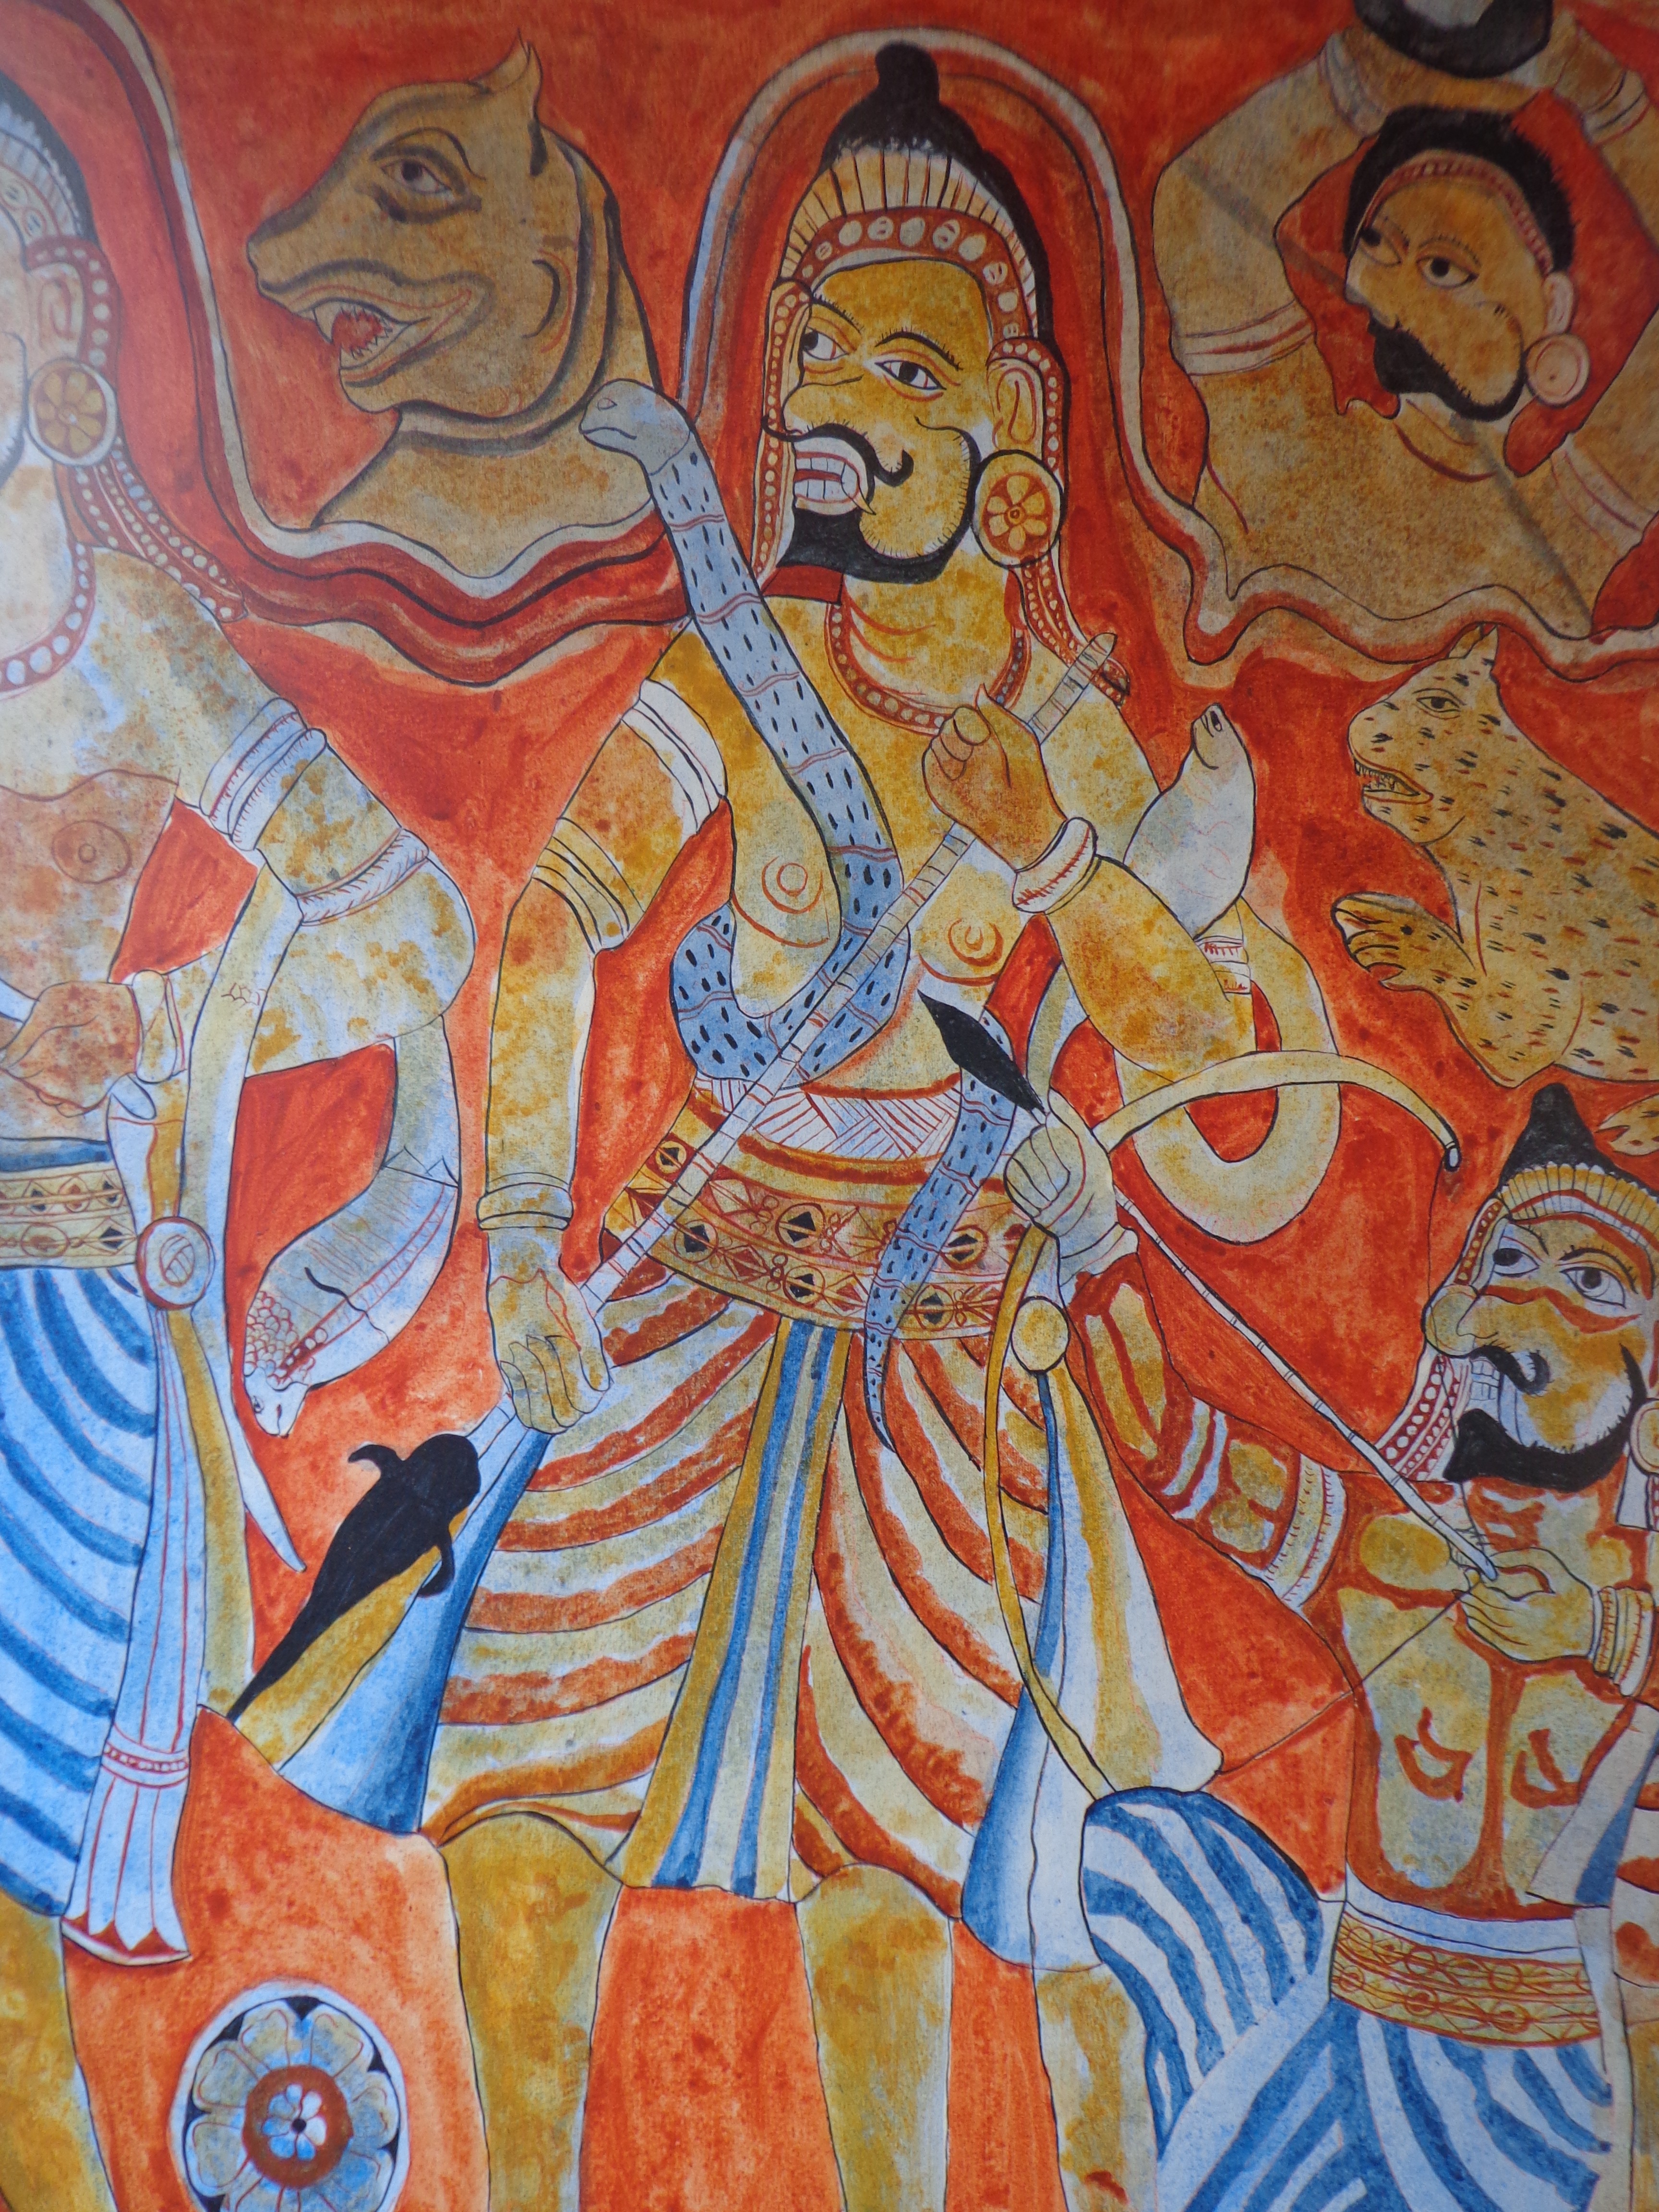 Hindagala temple painting by Sanjeewa Ilangarathne